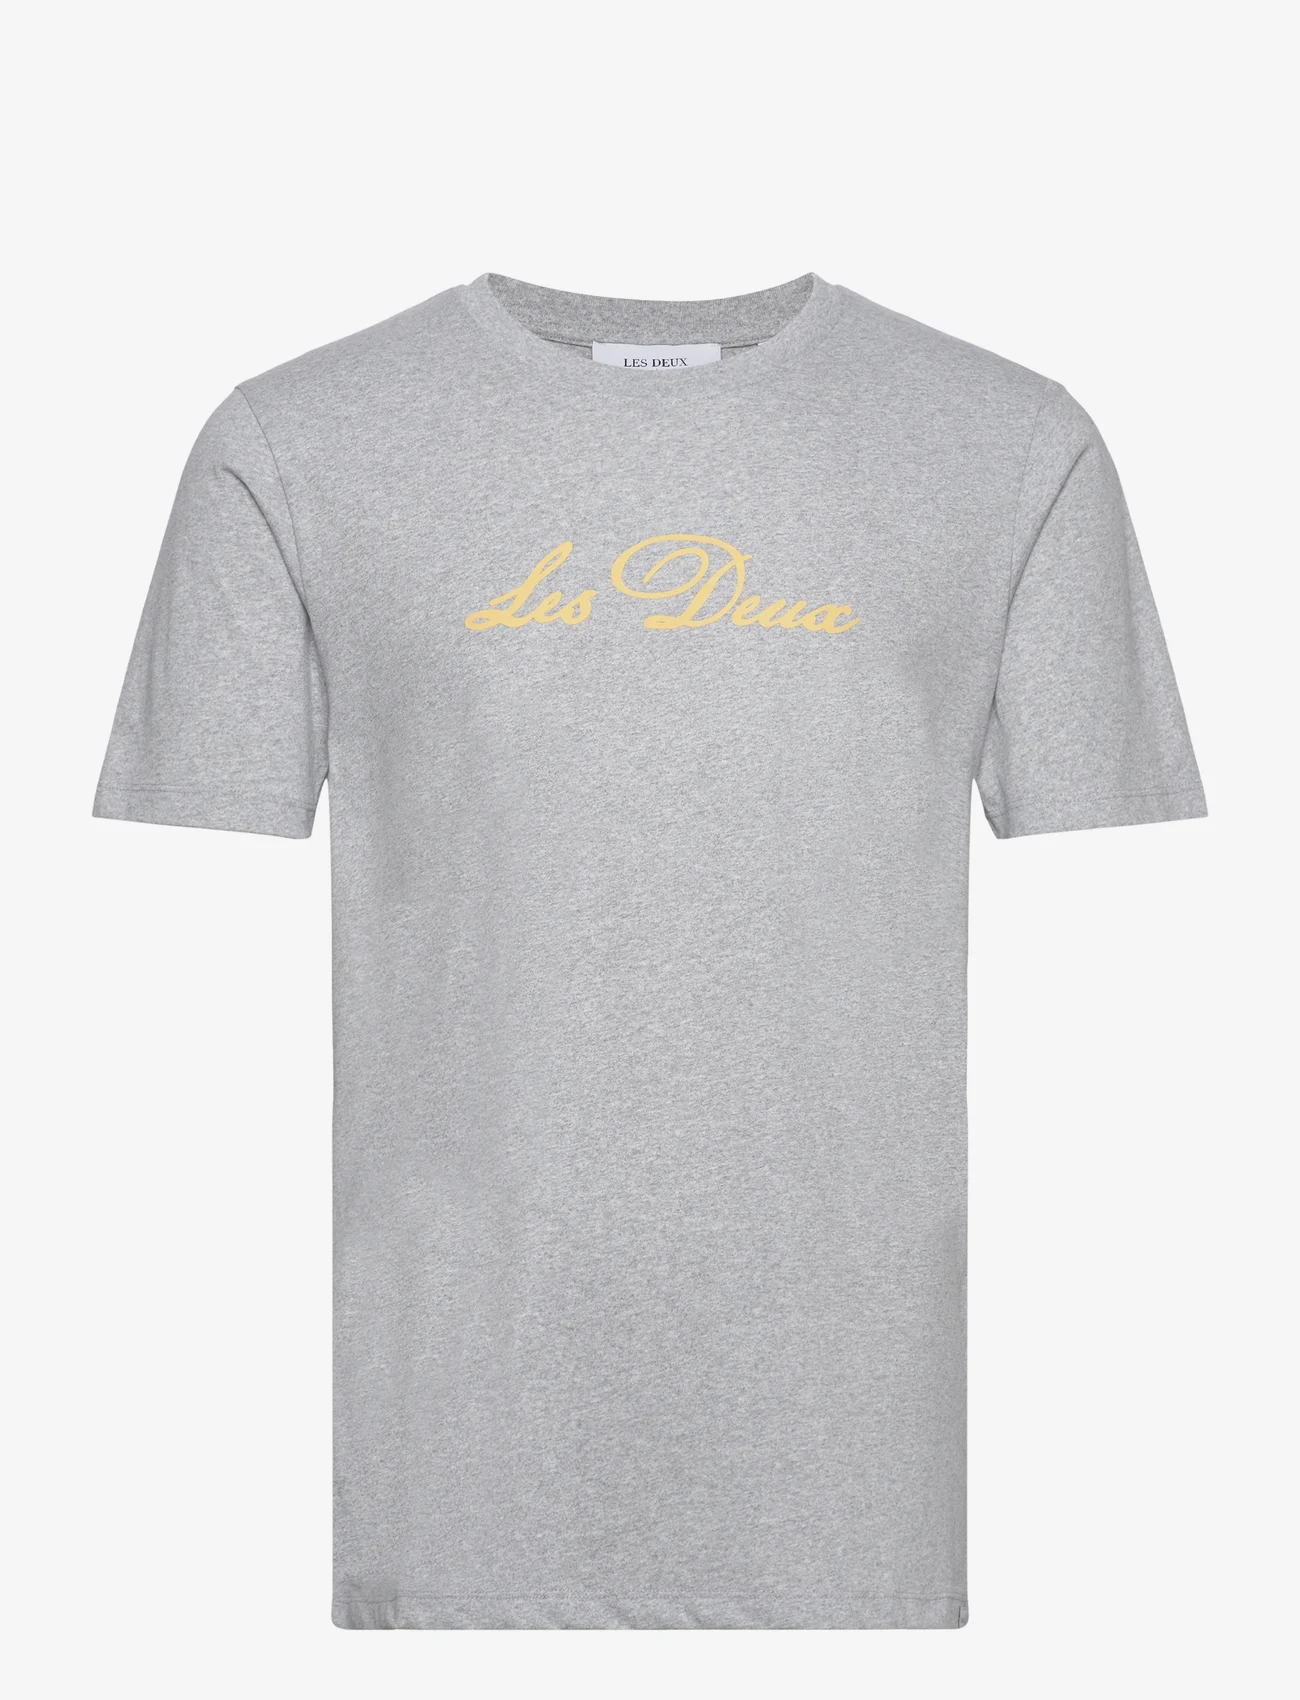 Les Deux - Cory T-Shirt - lühikeste varrukatega t-särgid - light grey mÉlange - 0